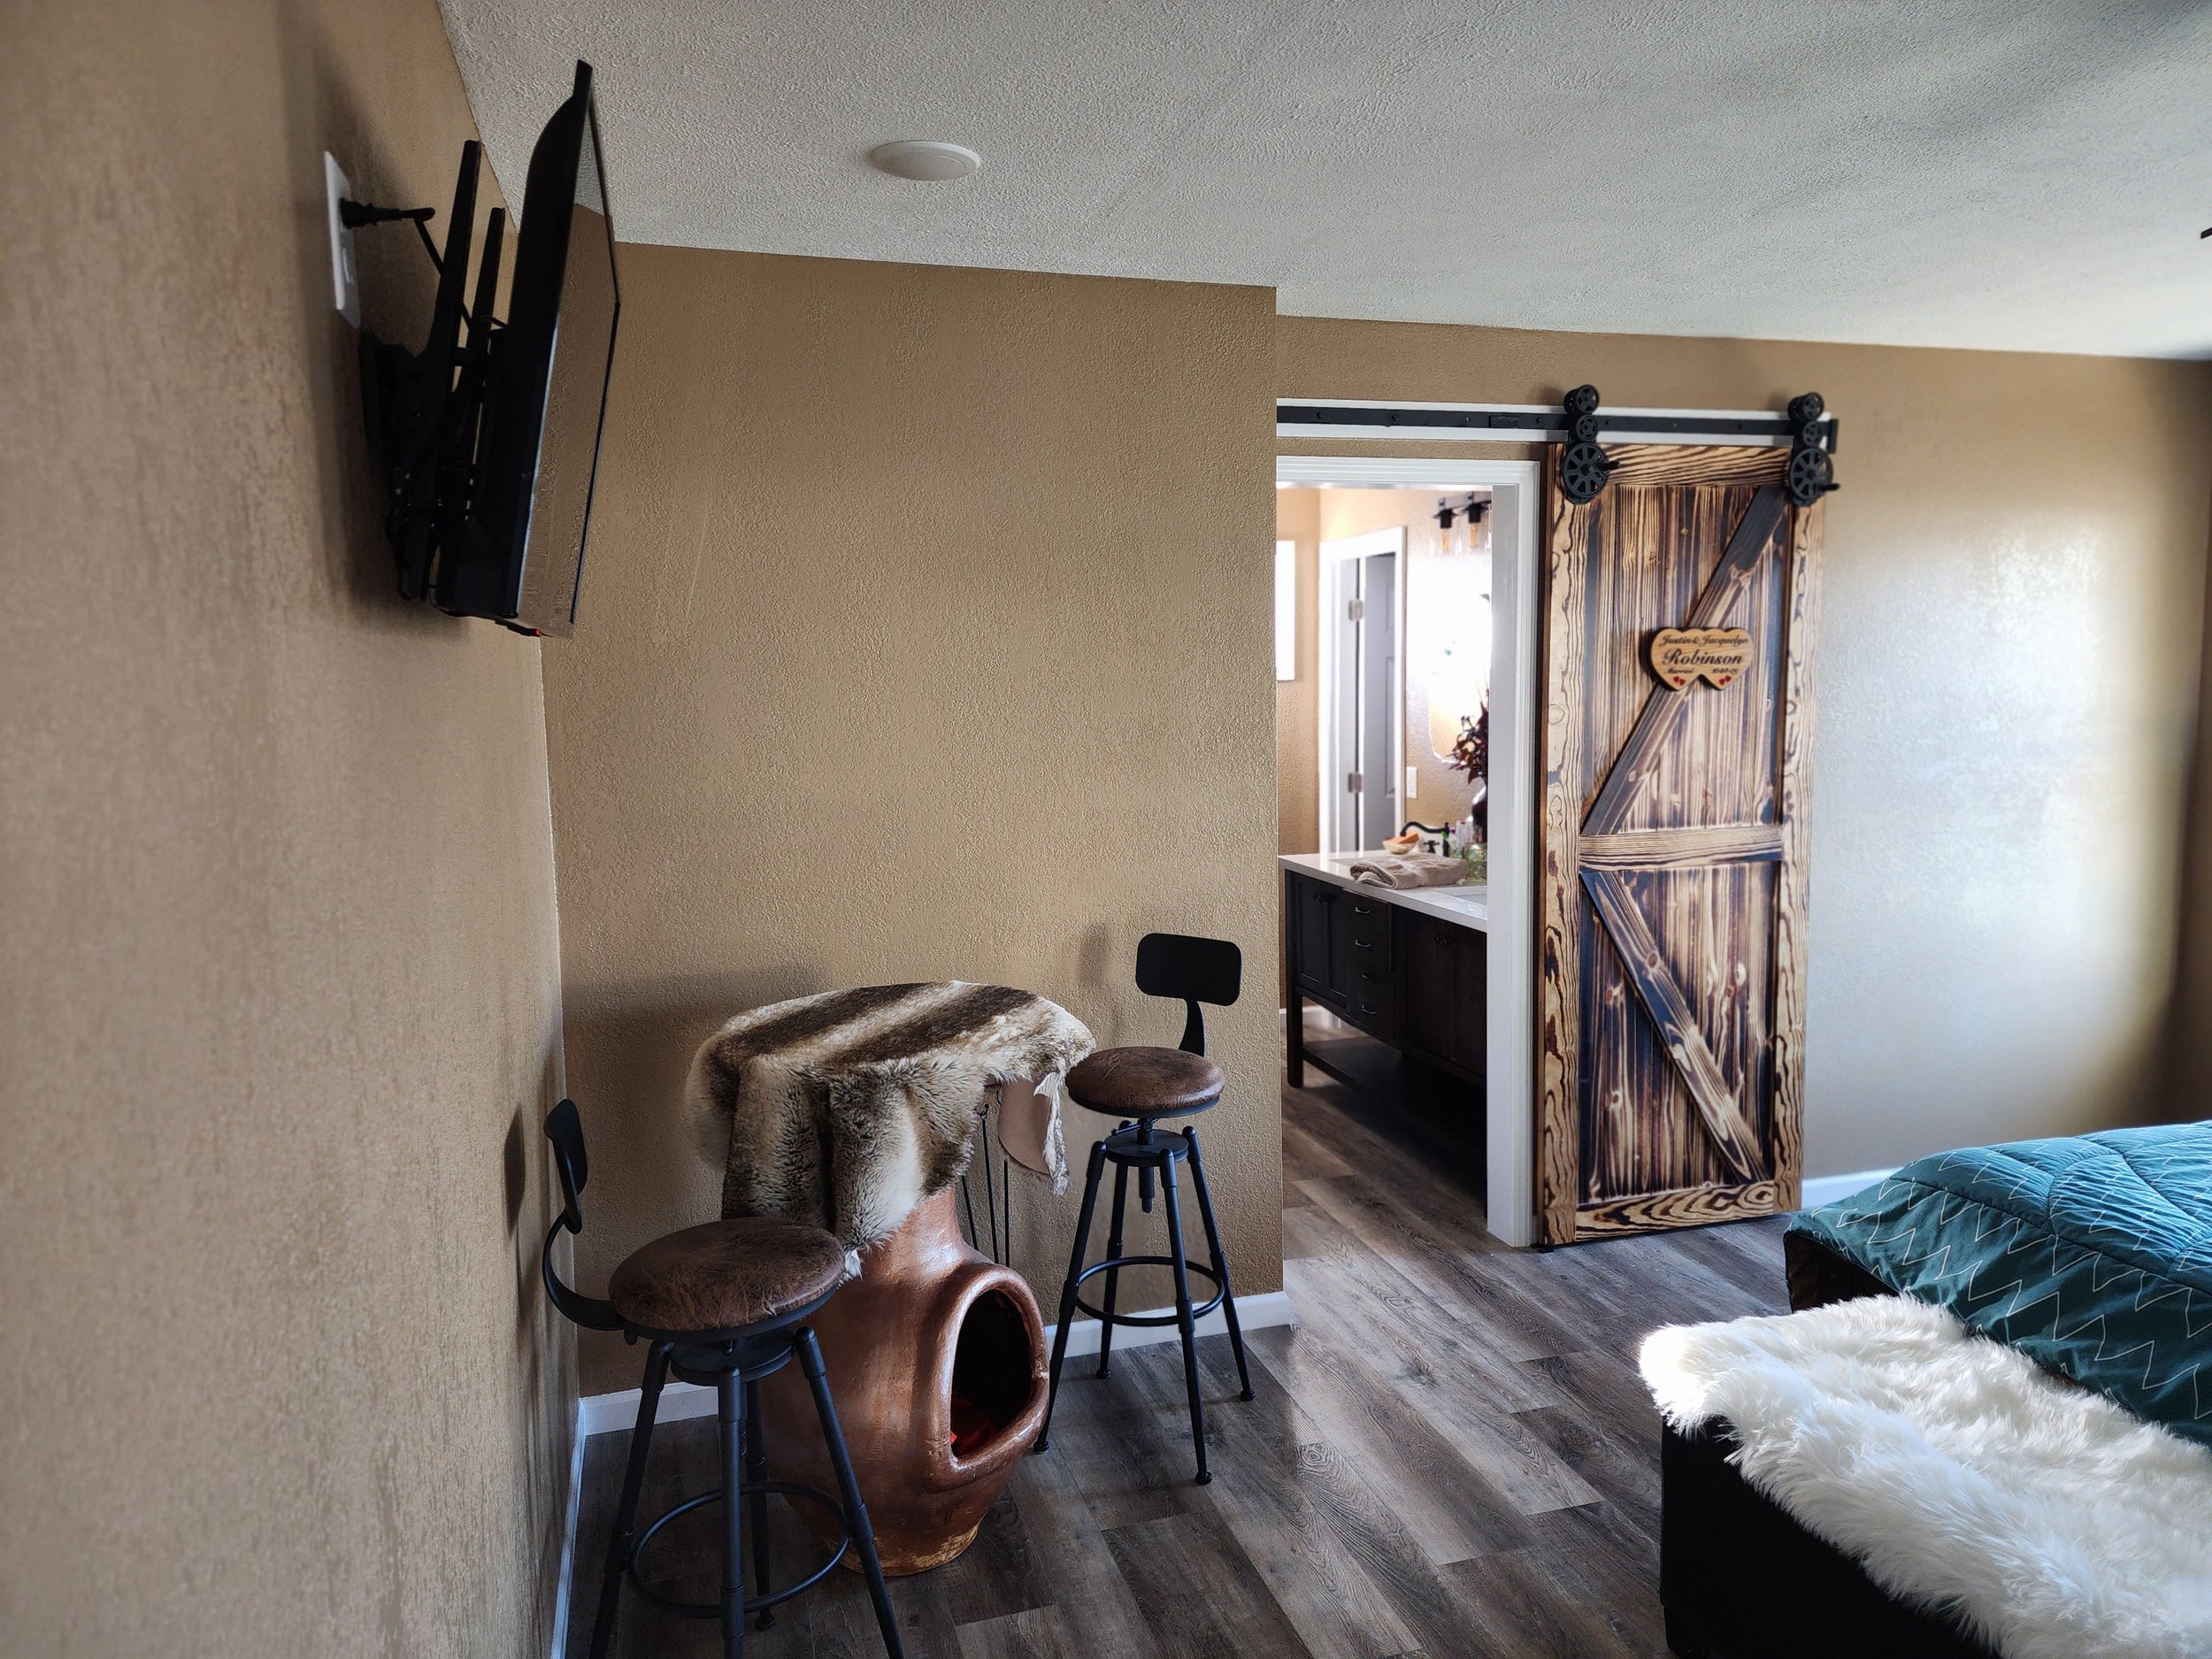  Remodeled bedroom featuring dark wood floors and barnwood doors leading into renovated bathroom 